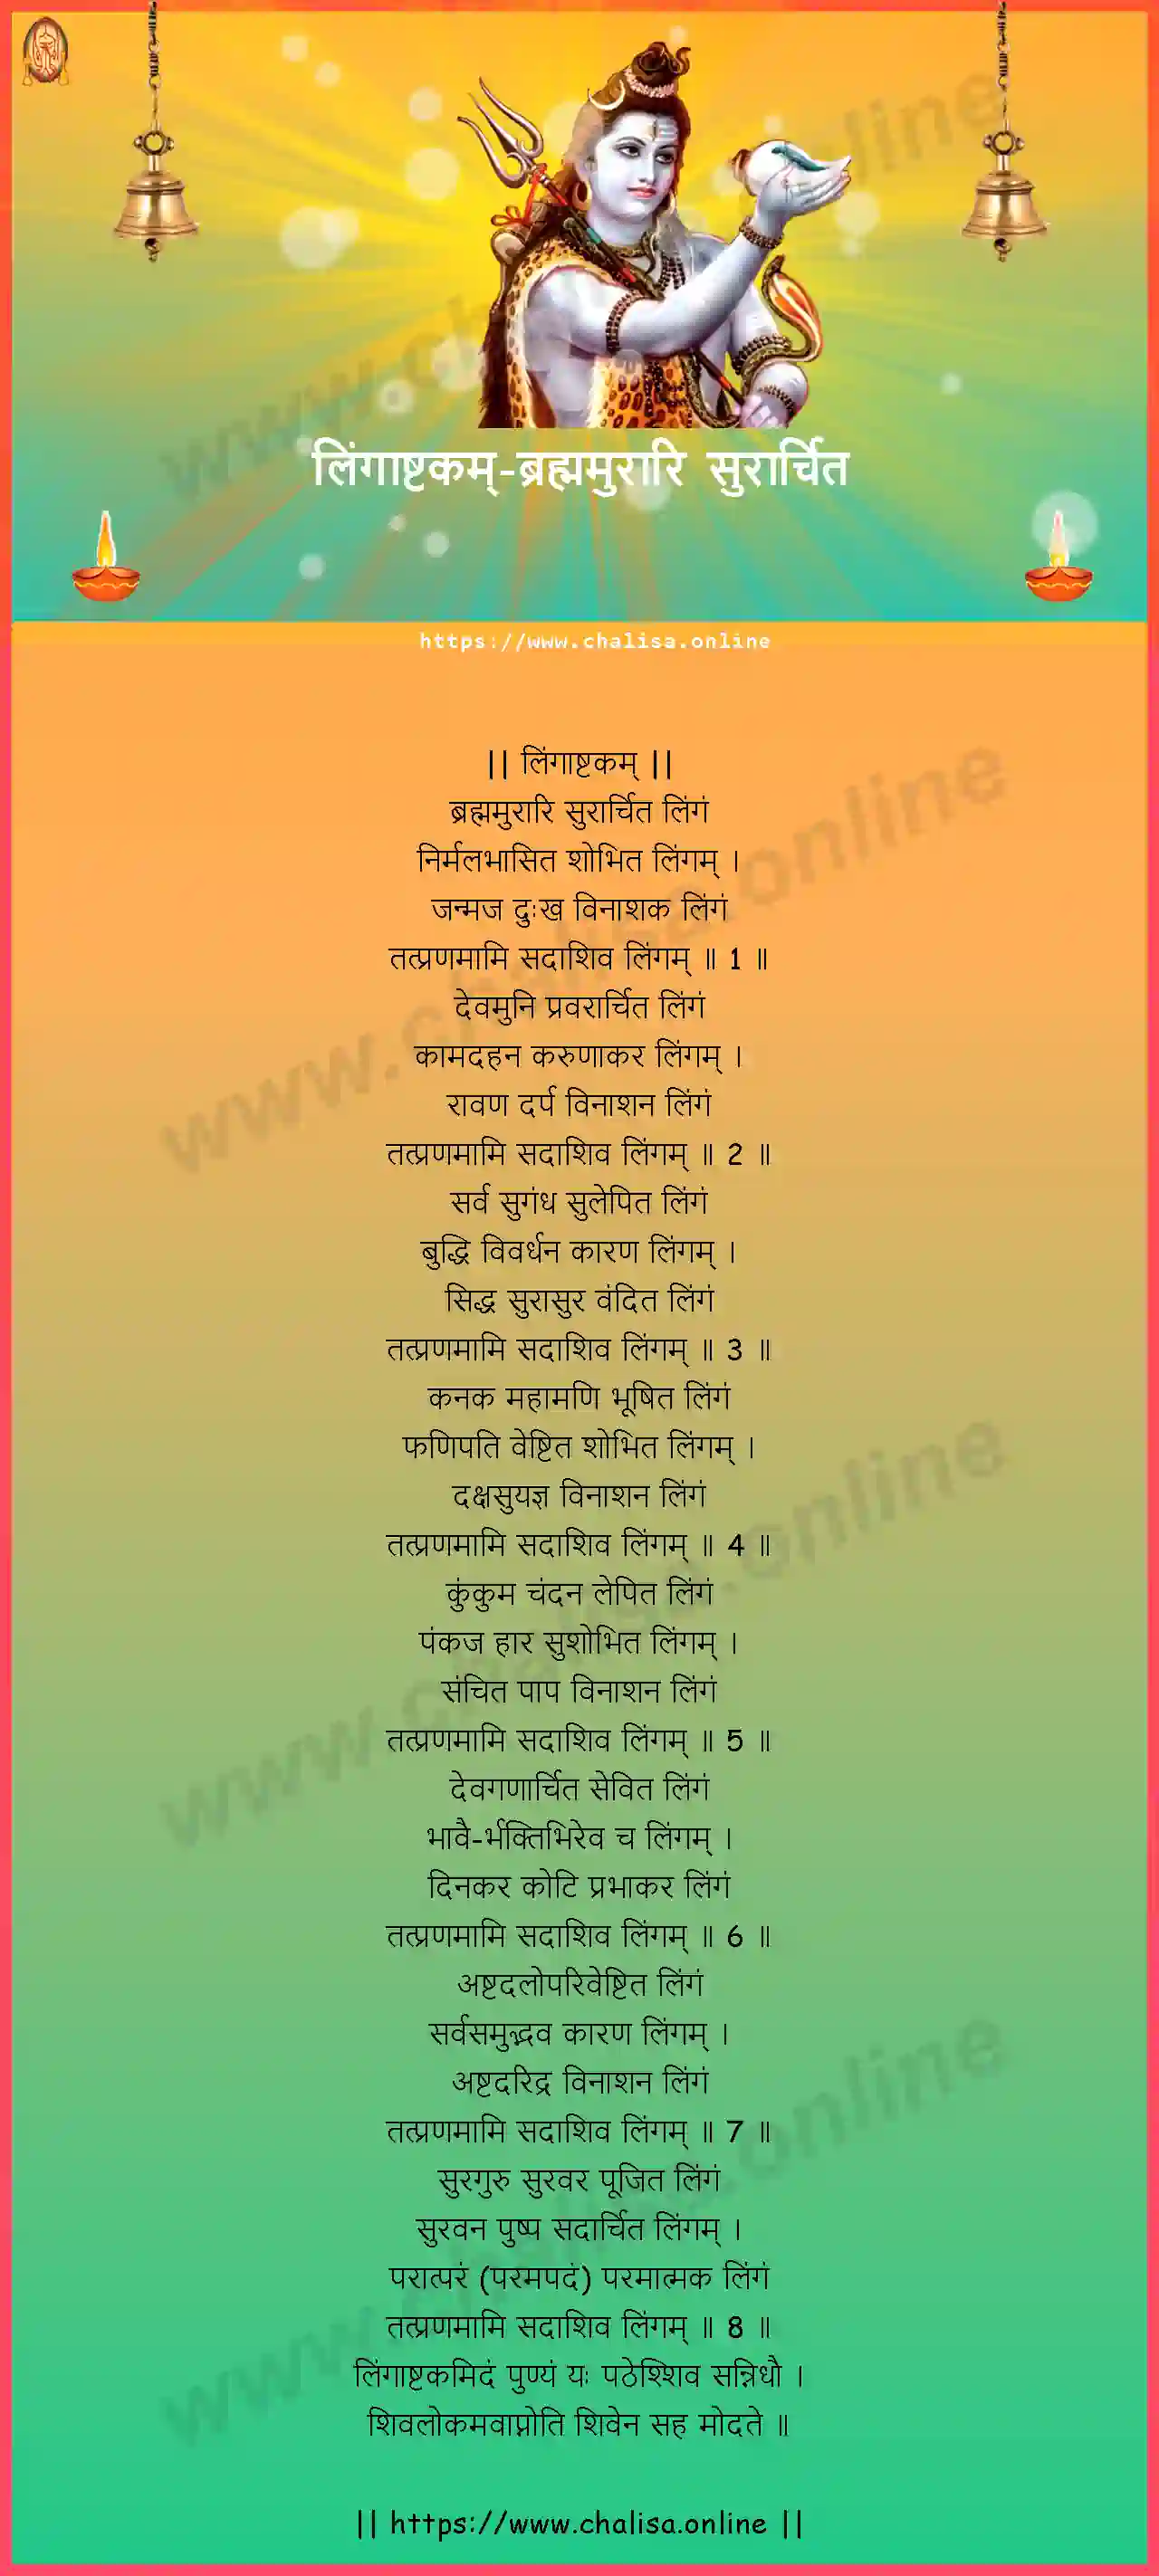 brahmamurari-surarchita-lingashtakam-konkani-konkani-lyrics-download